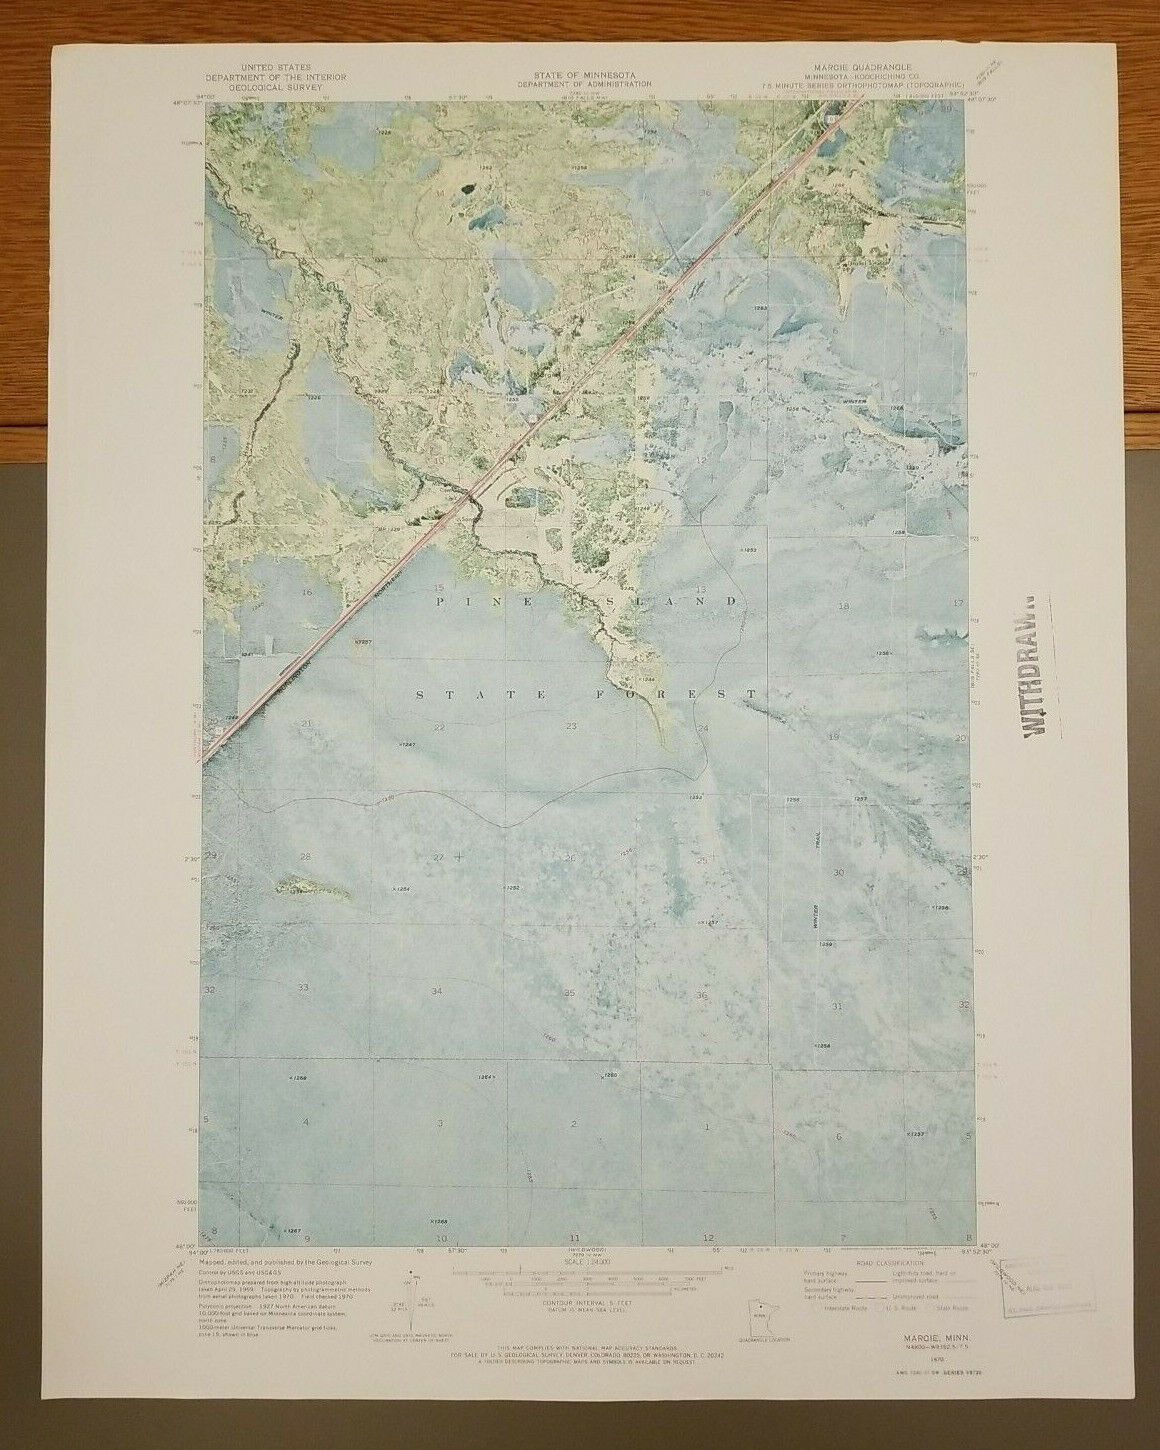 Margie, Minnesota Original Vintage 1970 USGS Topo Map 27